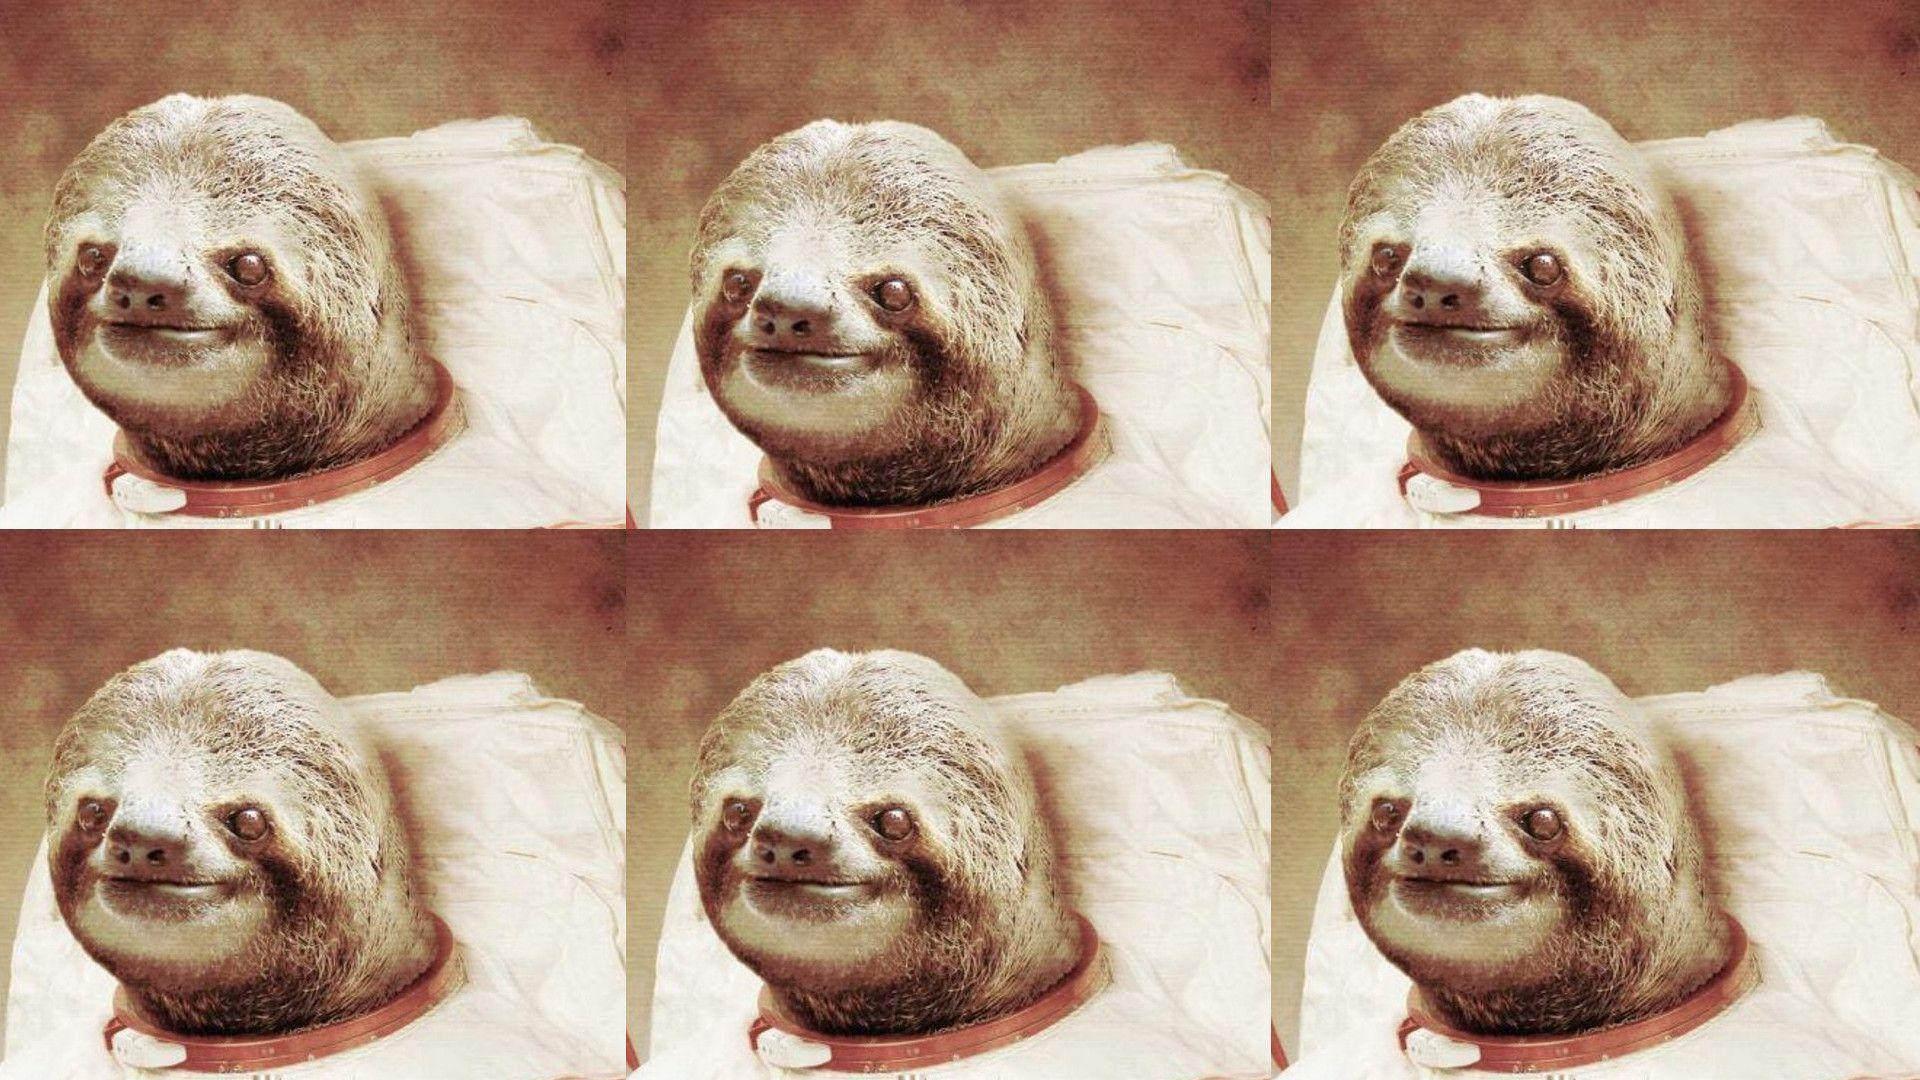 Captivating Sloth Astronaut Wallpaper 1920x1080PX Sloth